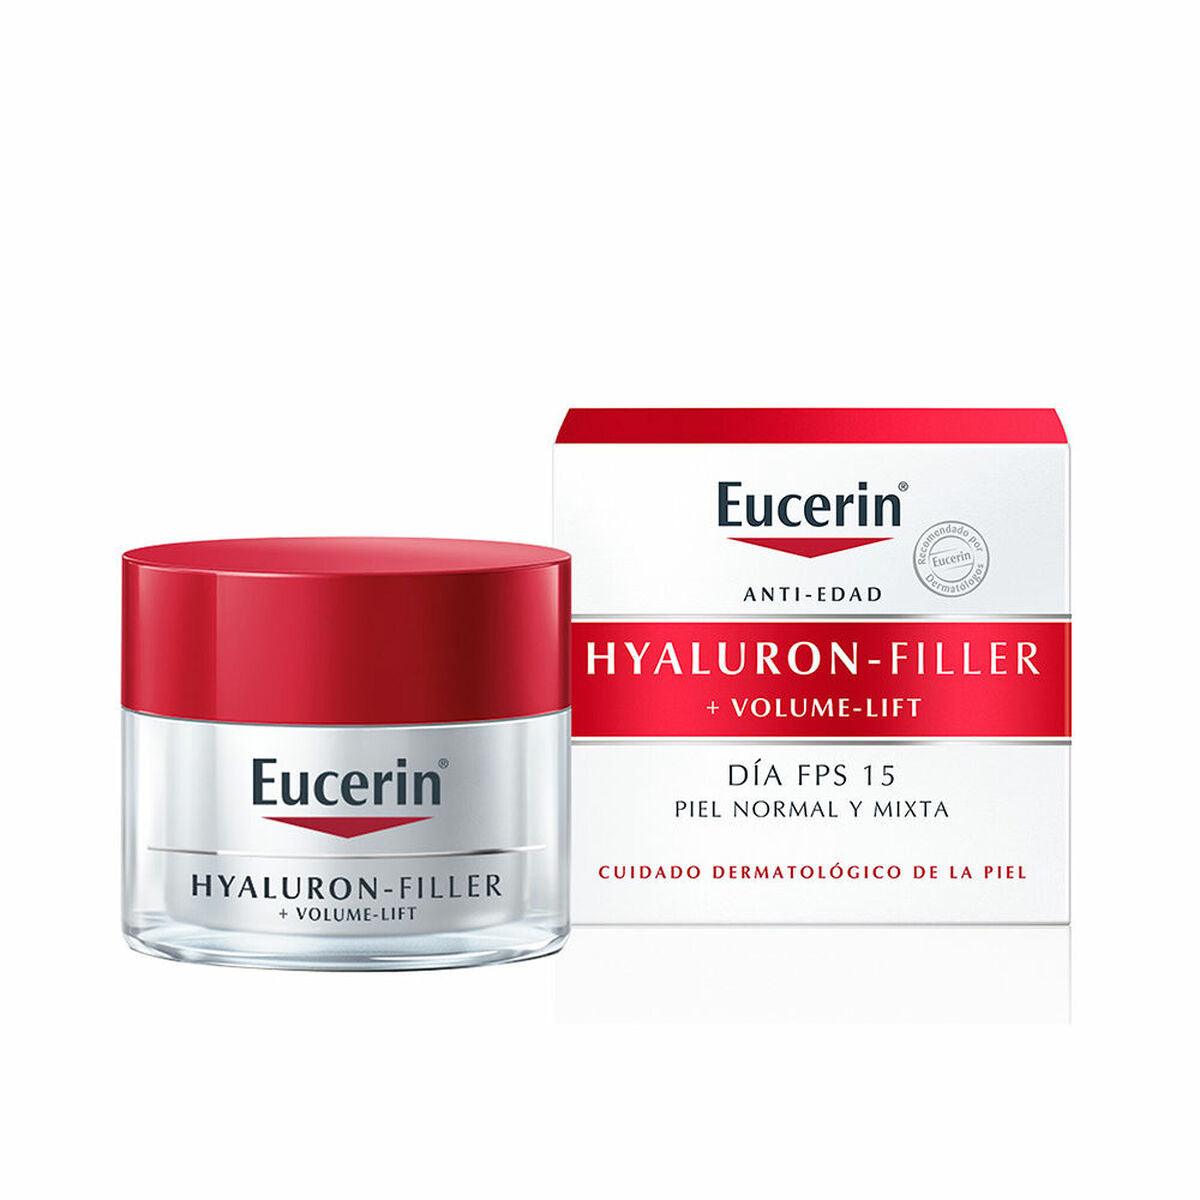 Eucerin Hyaluron remplissage + Lift en volume (50 ml)